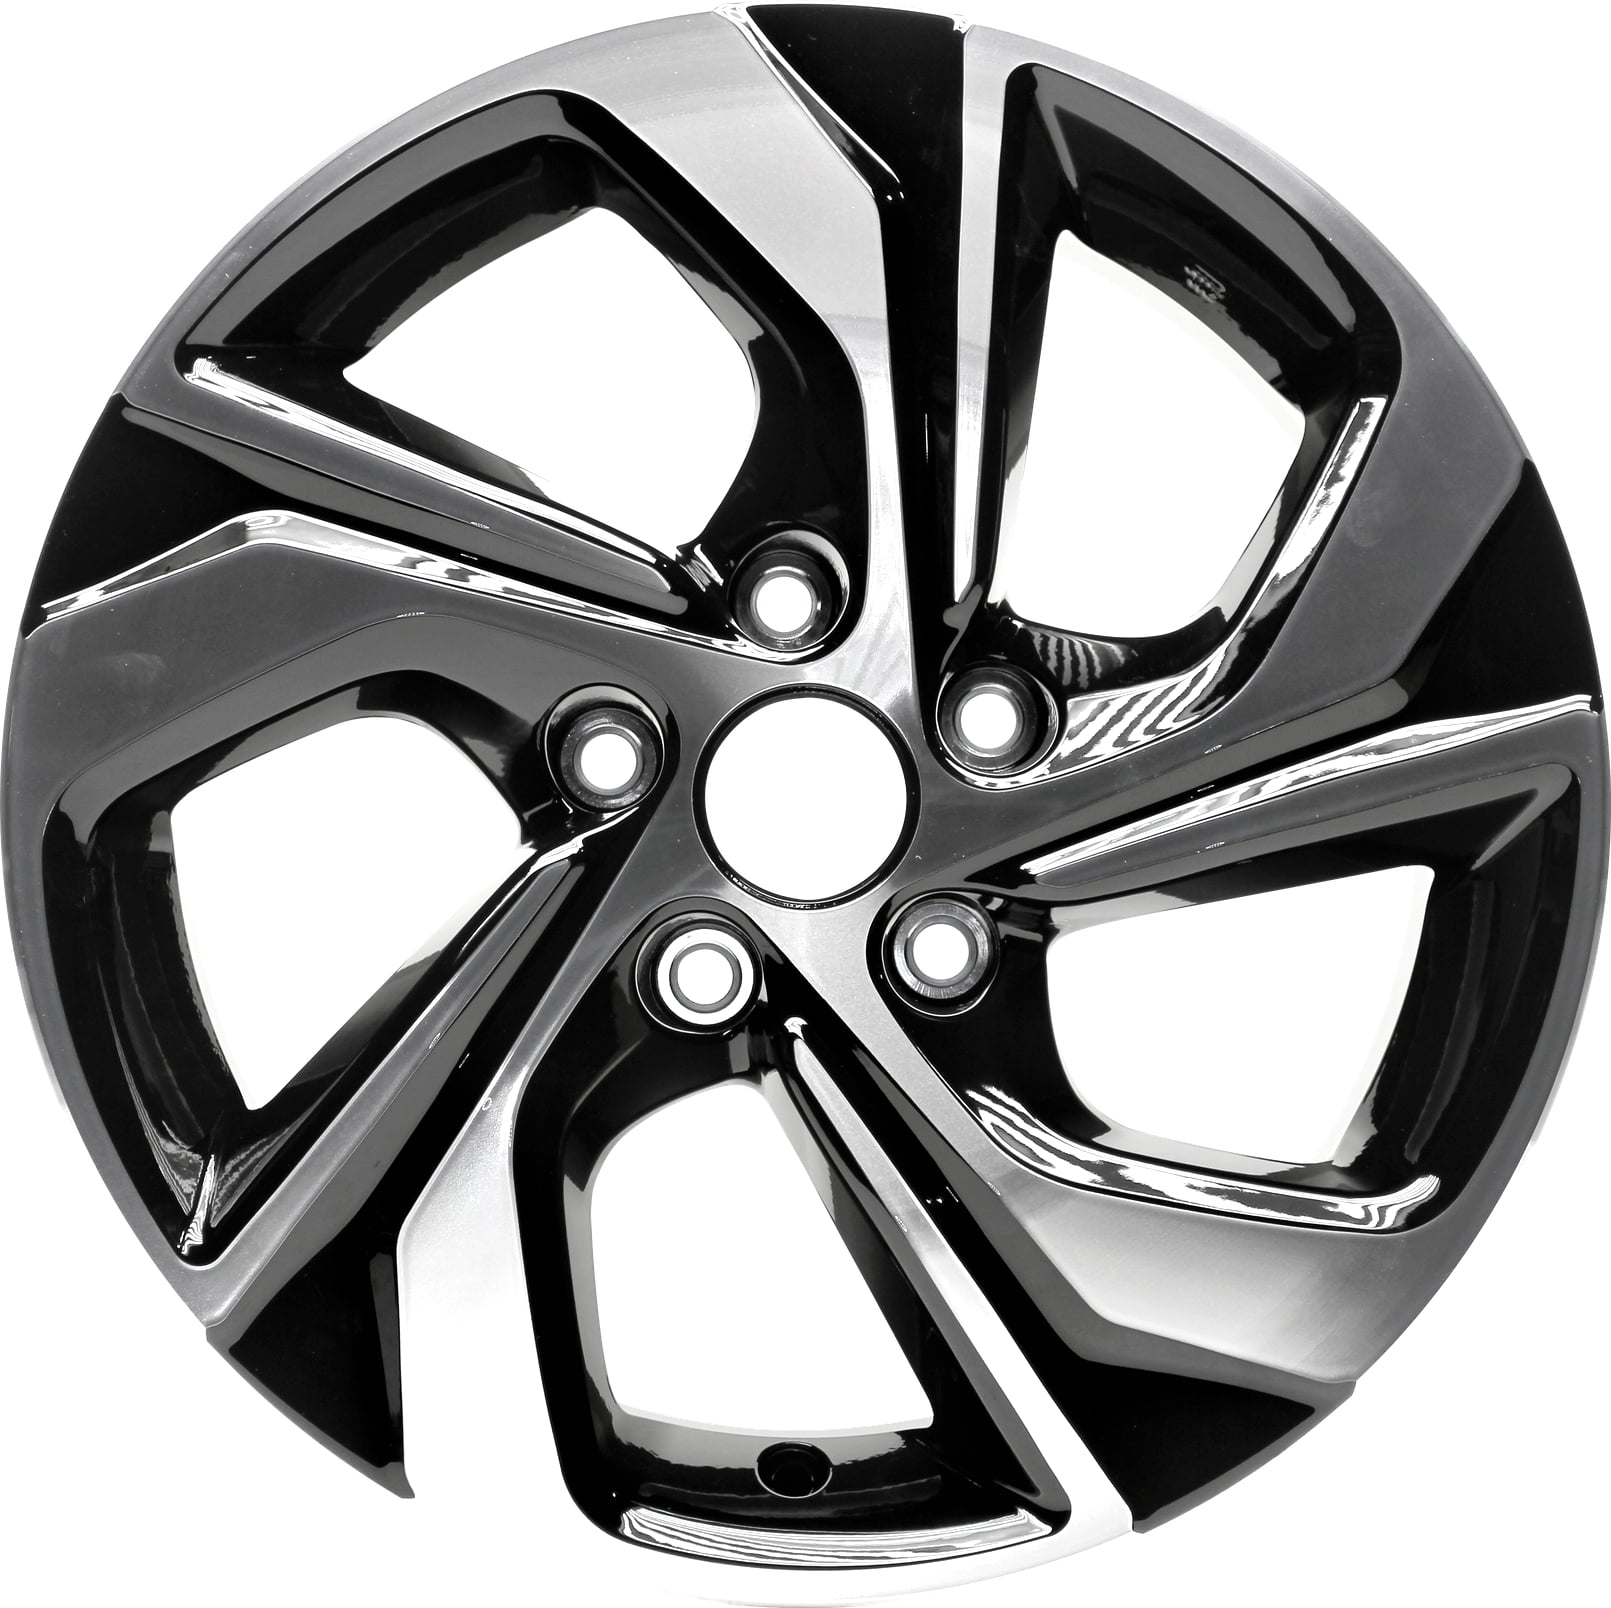 Road Ready 16 Inch Aluminum Wheel Rim For 2016-2020 Honda Civic 5 Lug 114.3mm 